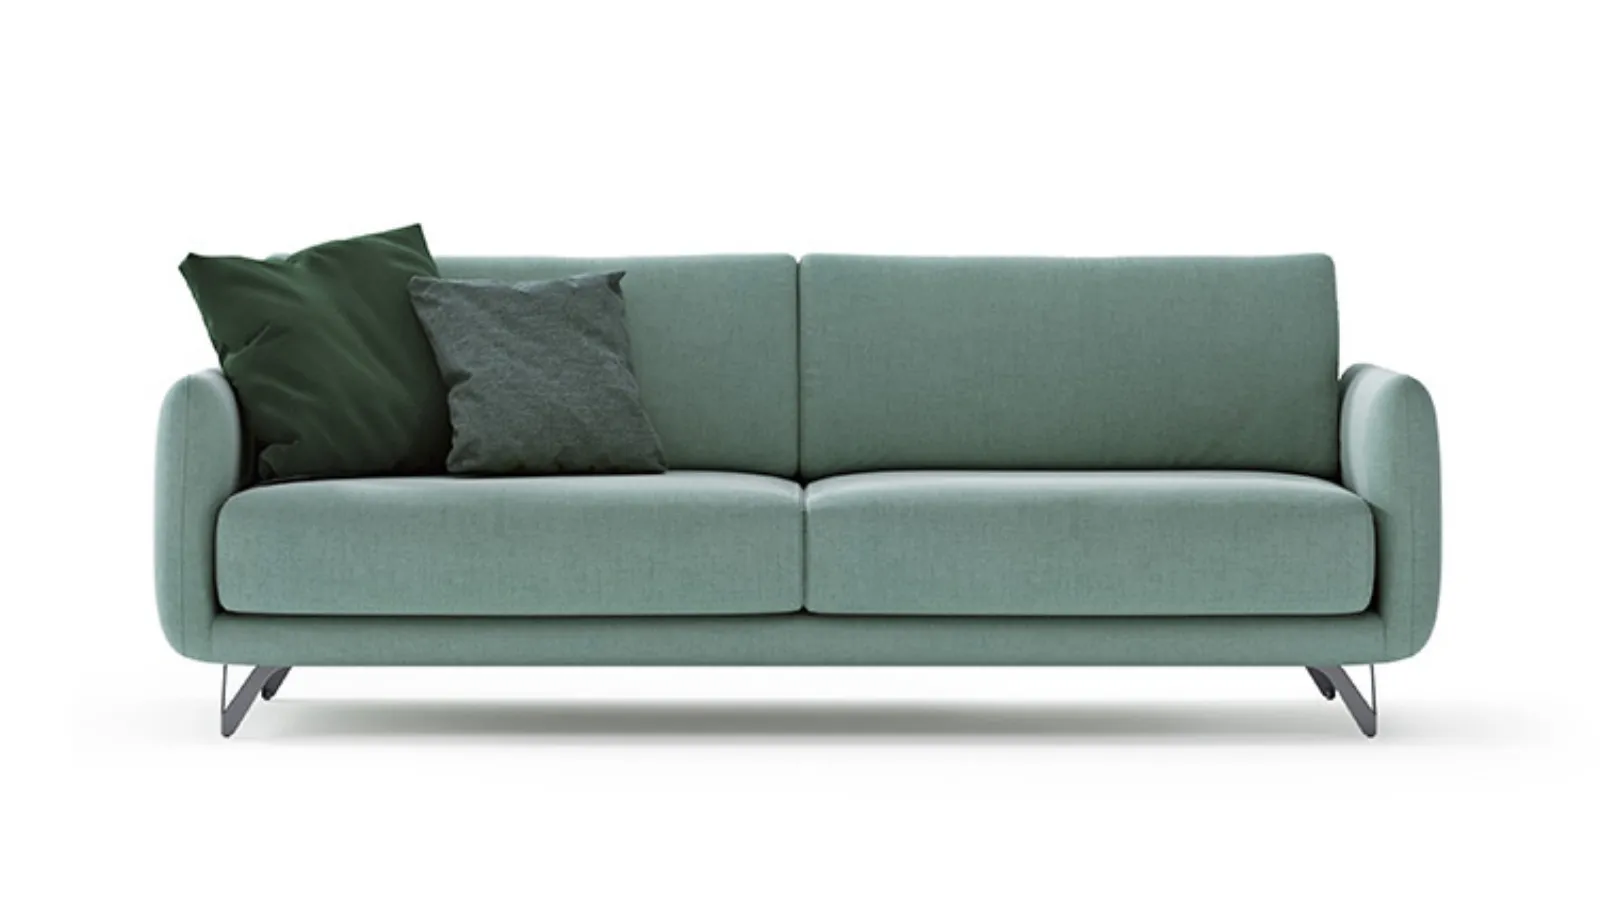 Bristol sliding seat sofa